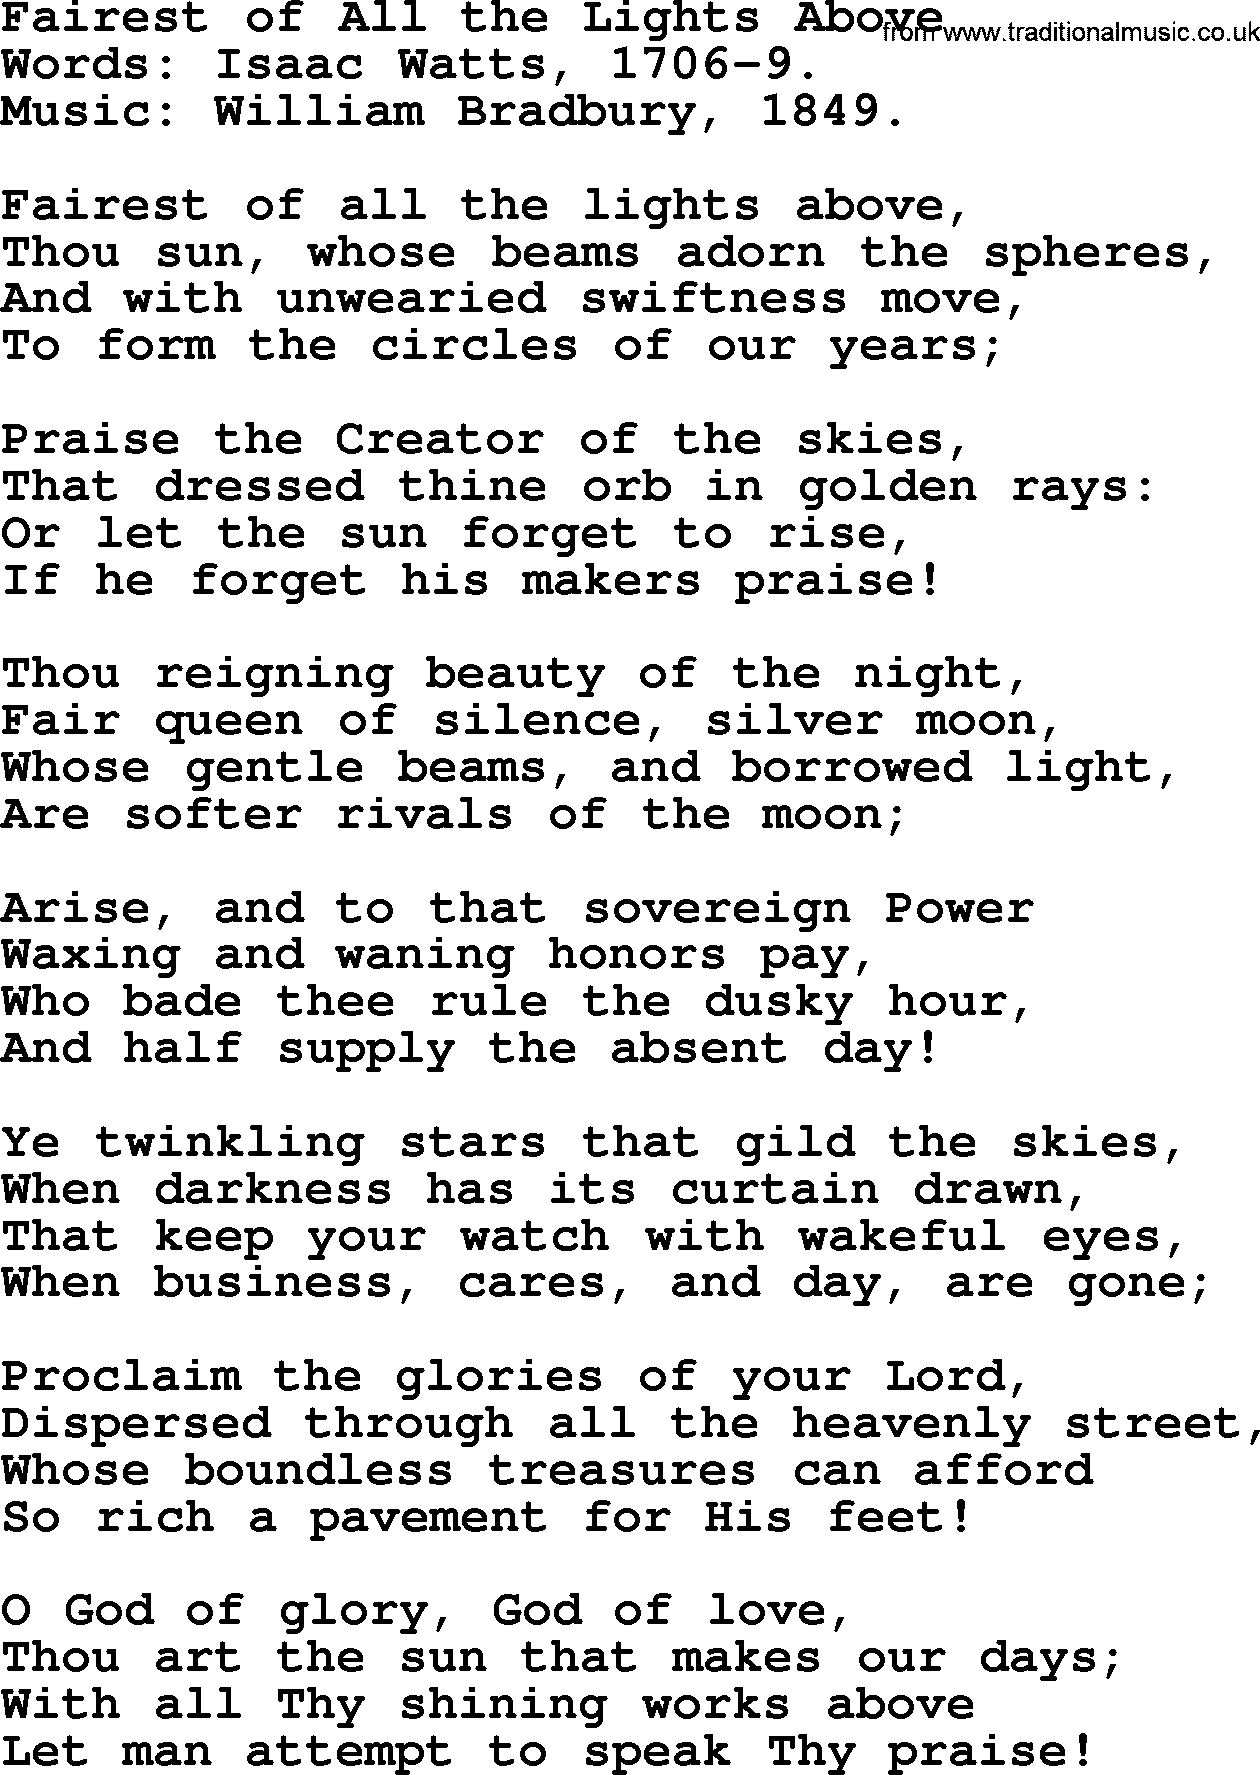 Isaac Watts Christian hymn: Fairest of All the Lights Above- lyricss